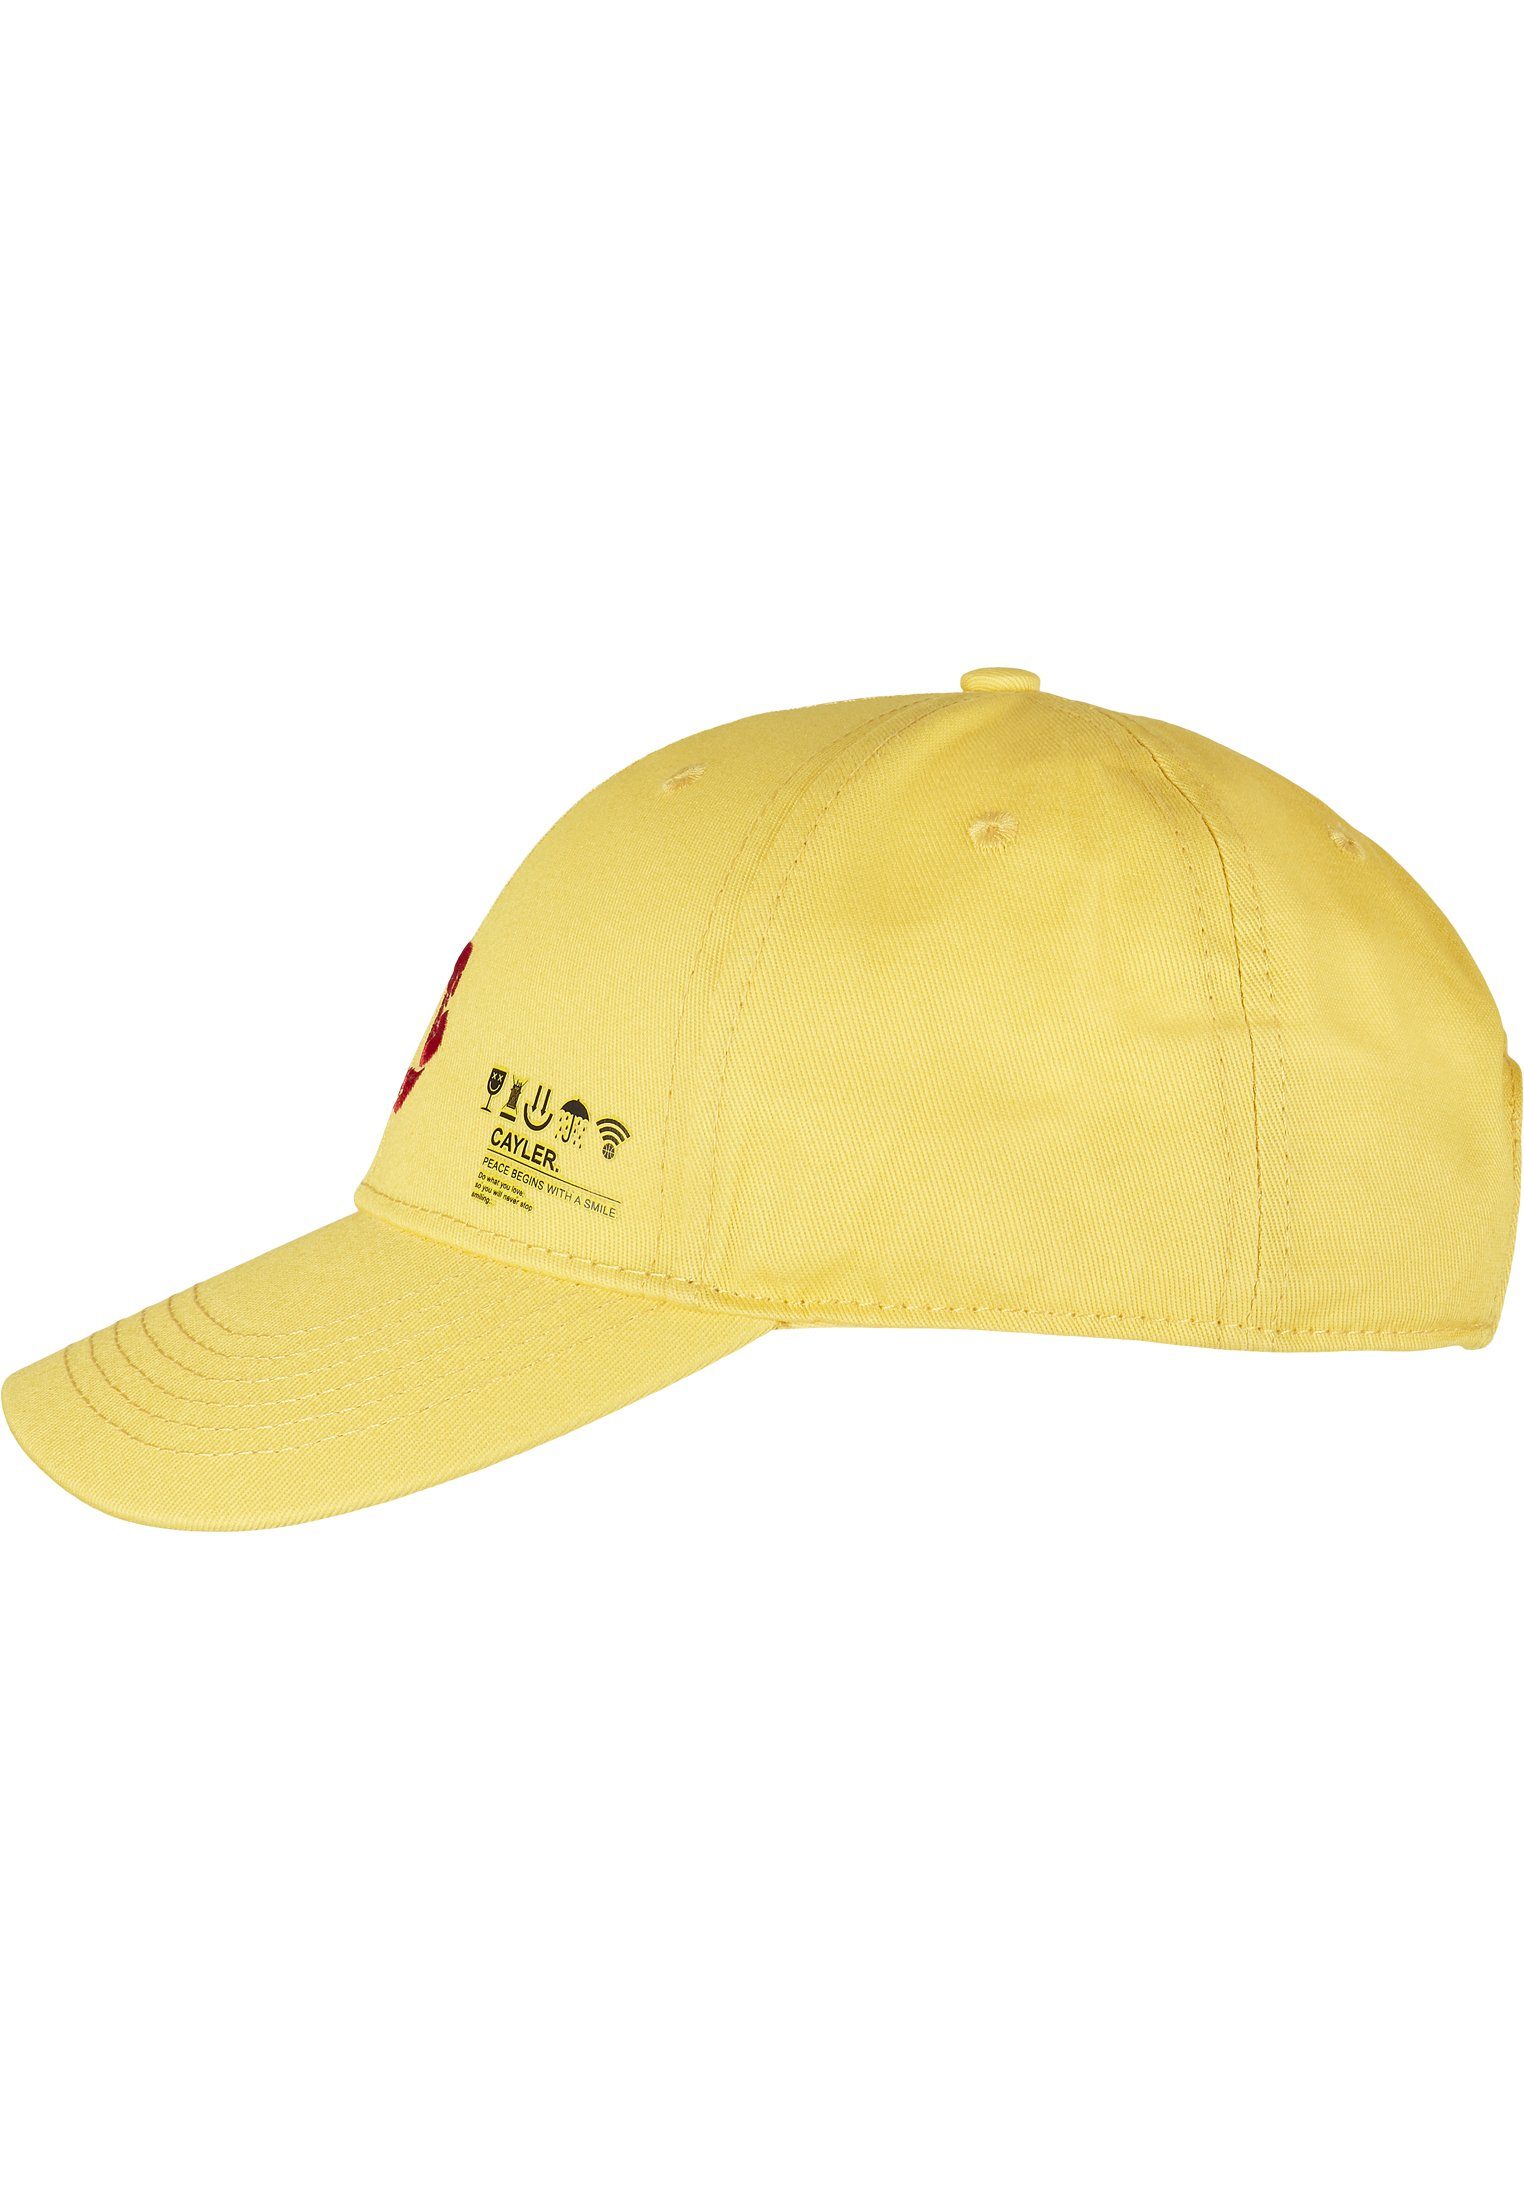 SONS C&S Cap Curved yellow/multicolor Iconic Flex Cap & CAYLER Peace